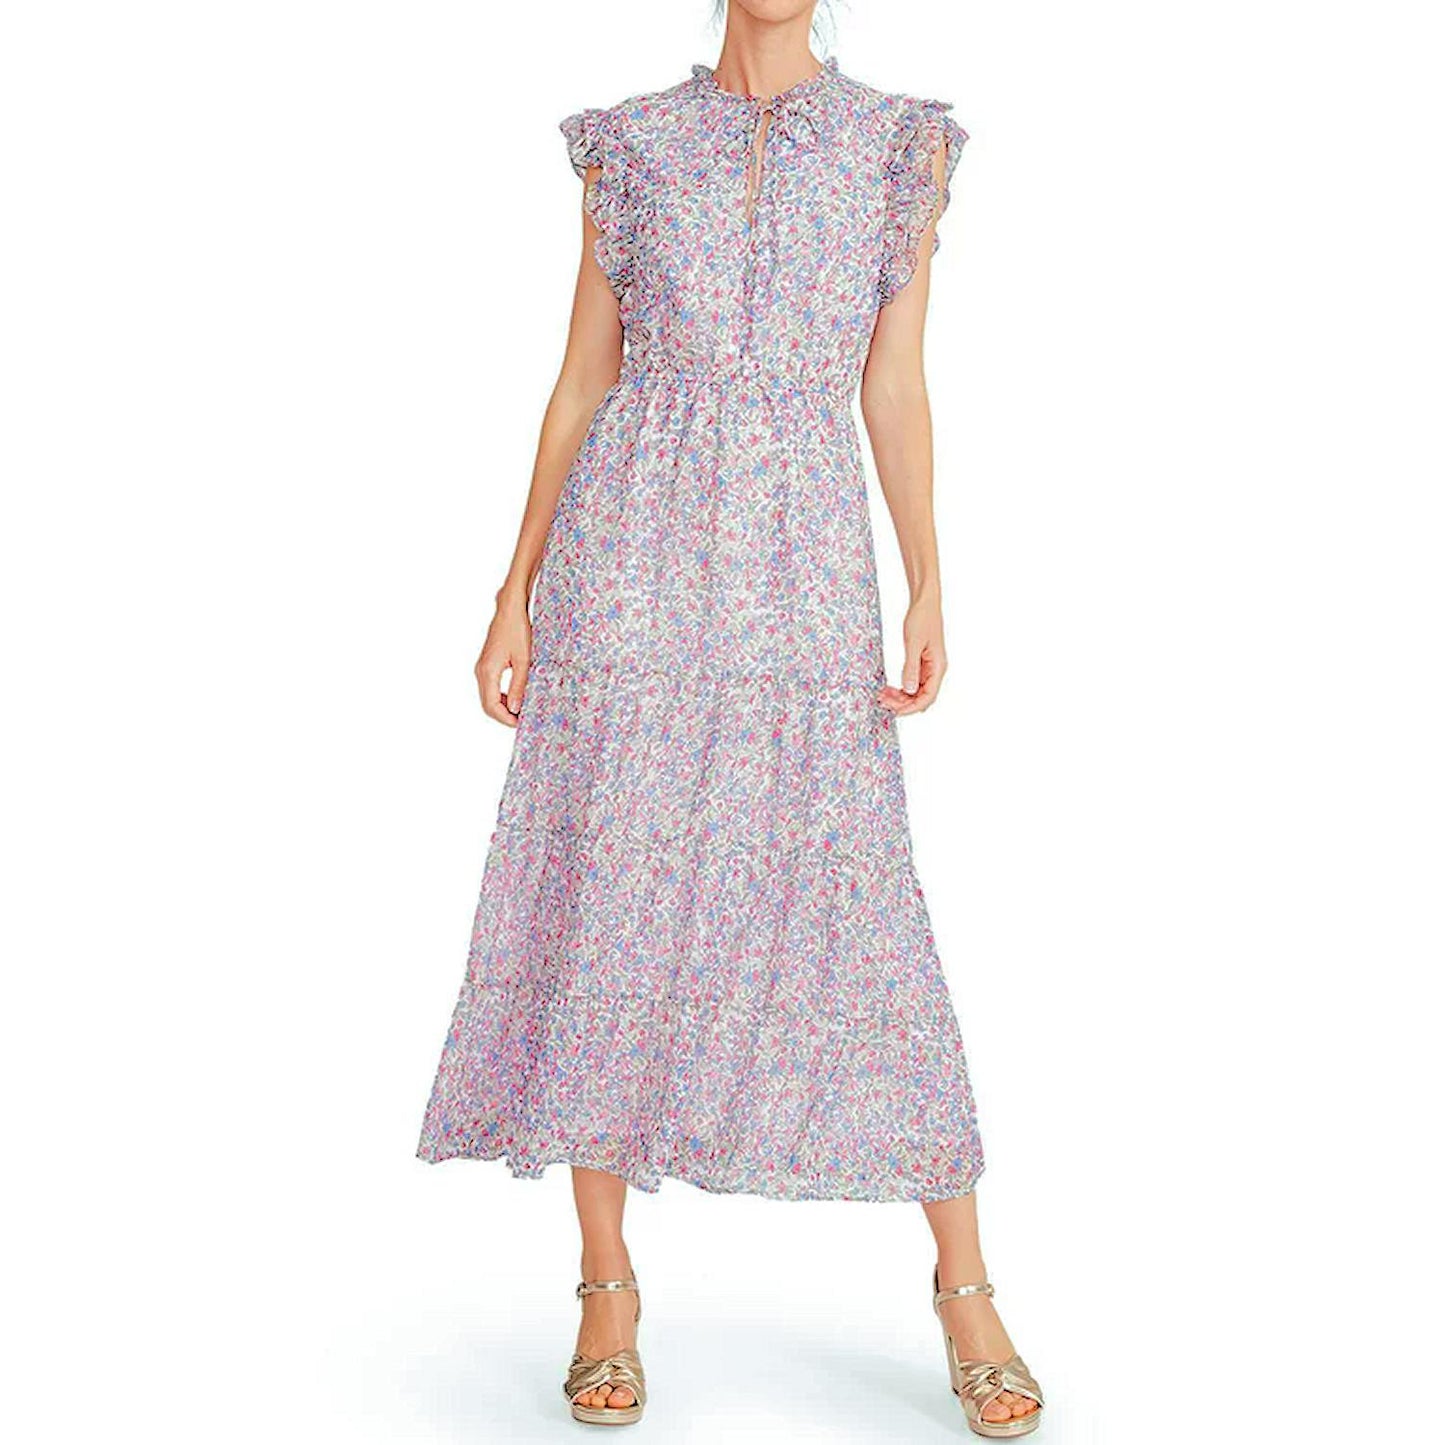 BB Dakota by Steve Madden Womens Ditsy Floral Sleeveless Printed Chiffon Dress